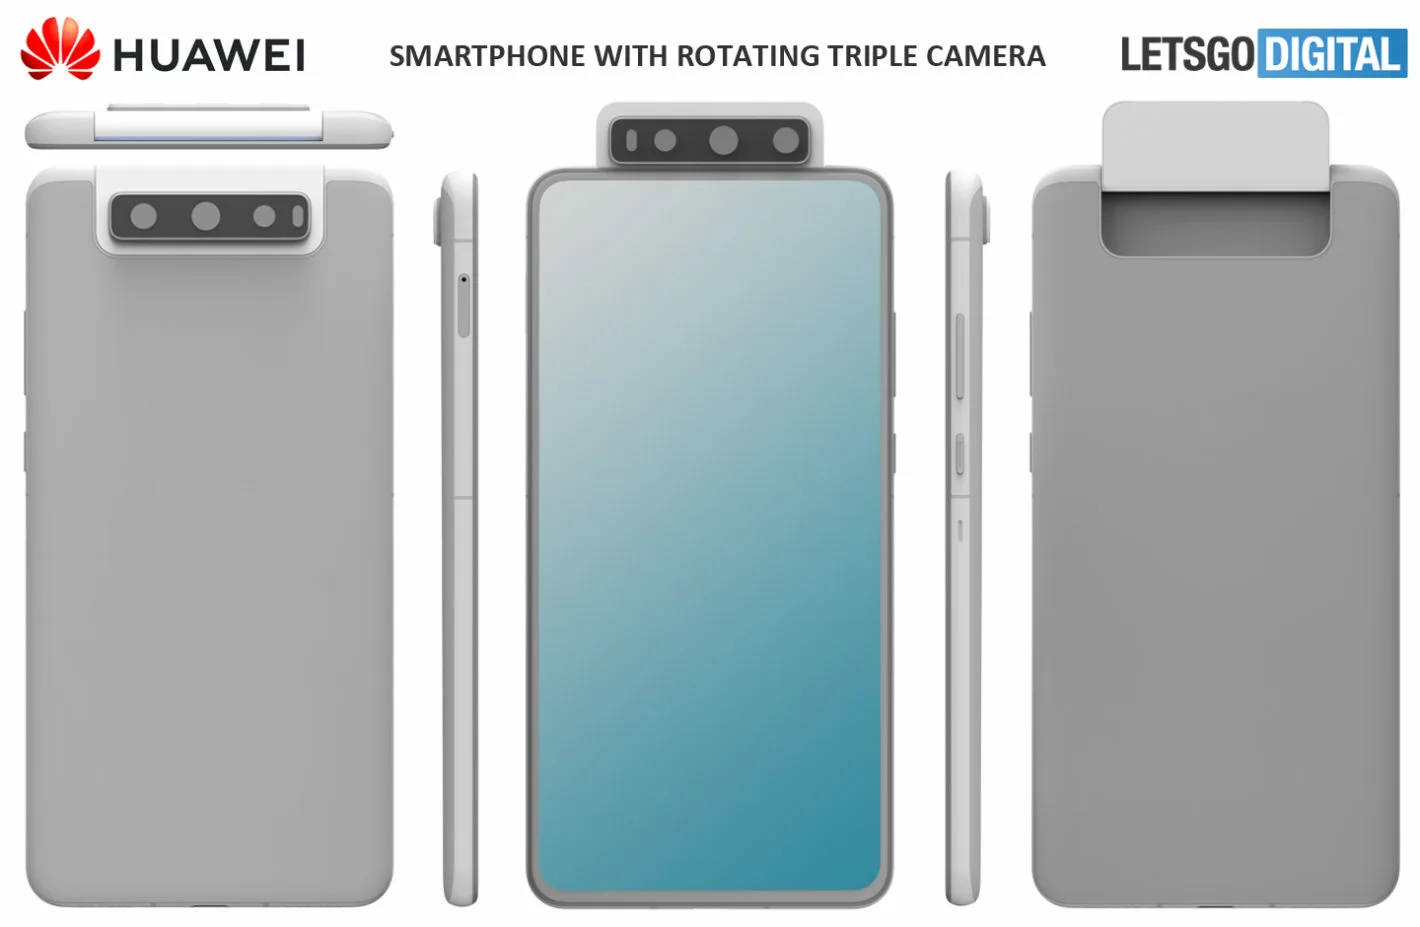 Huawei-smartphone-patent-three-flip-up-cameras-image-2-1420x927